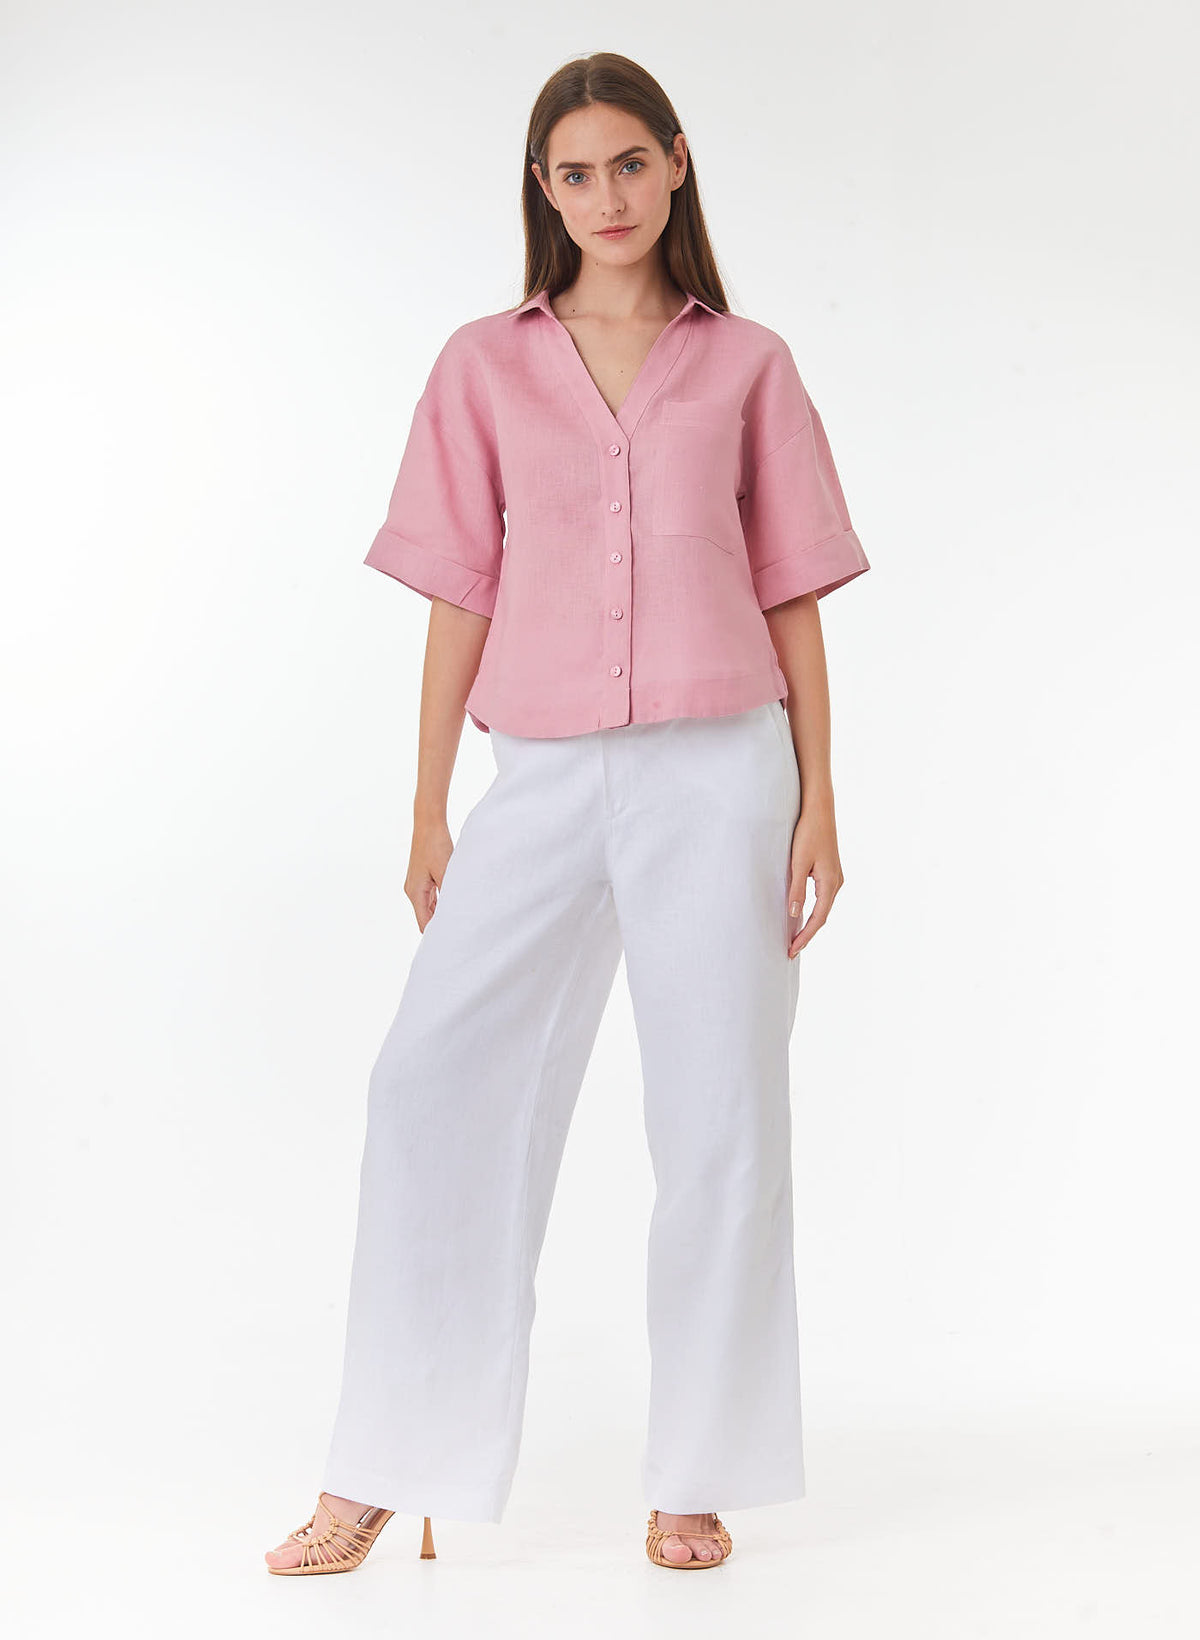 The Color Wear | Tienda Virtual | Pantalones | Pantalon Caipirina